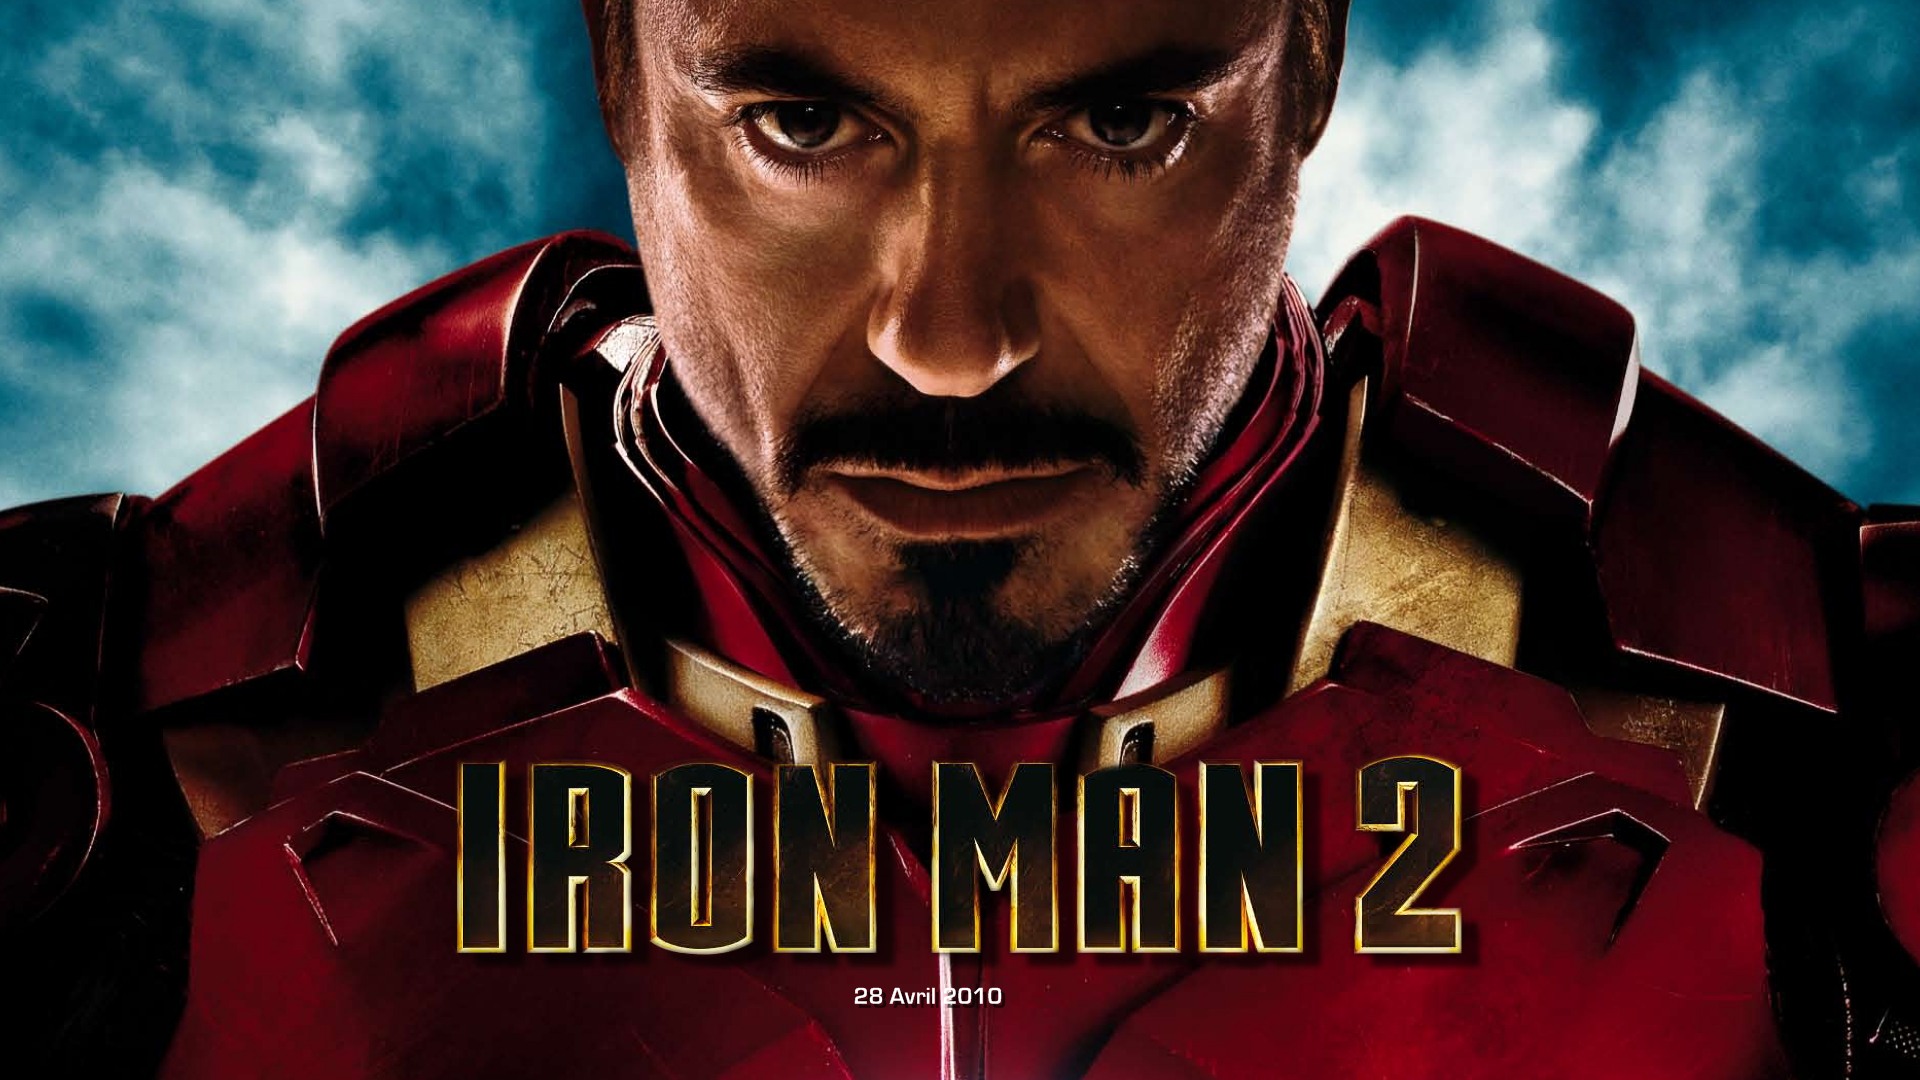 Iron Man 2&3 Man The Movie Wallpaper